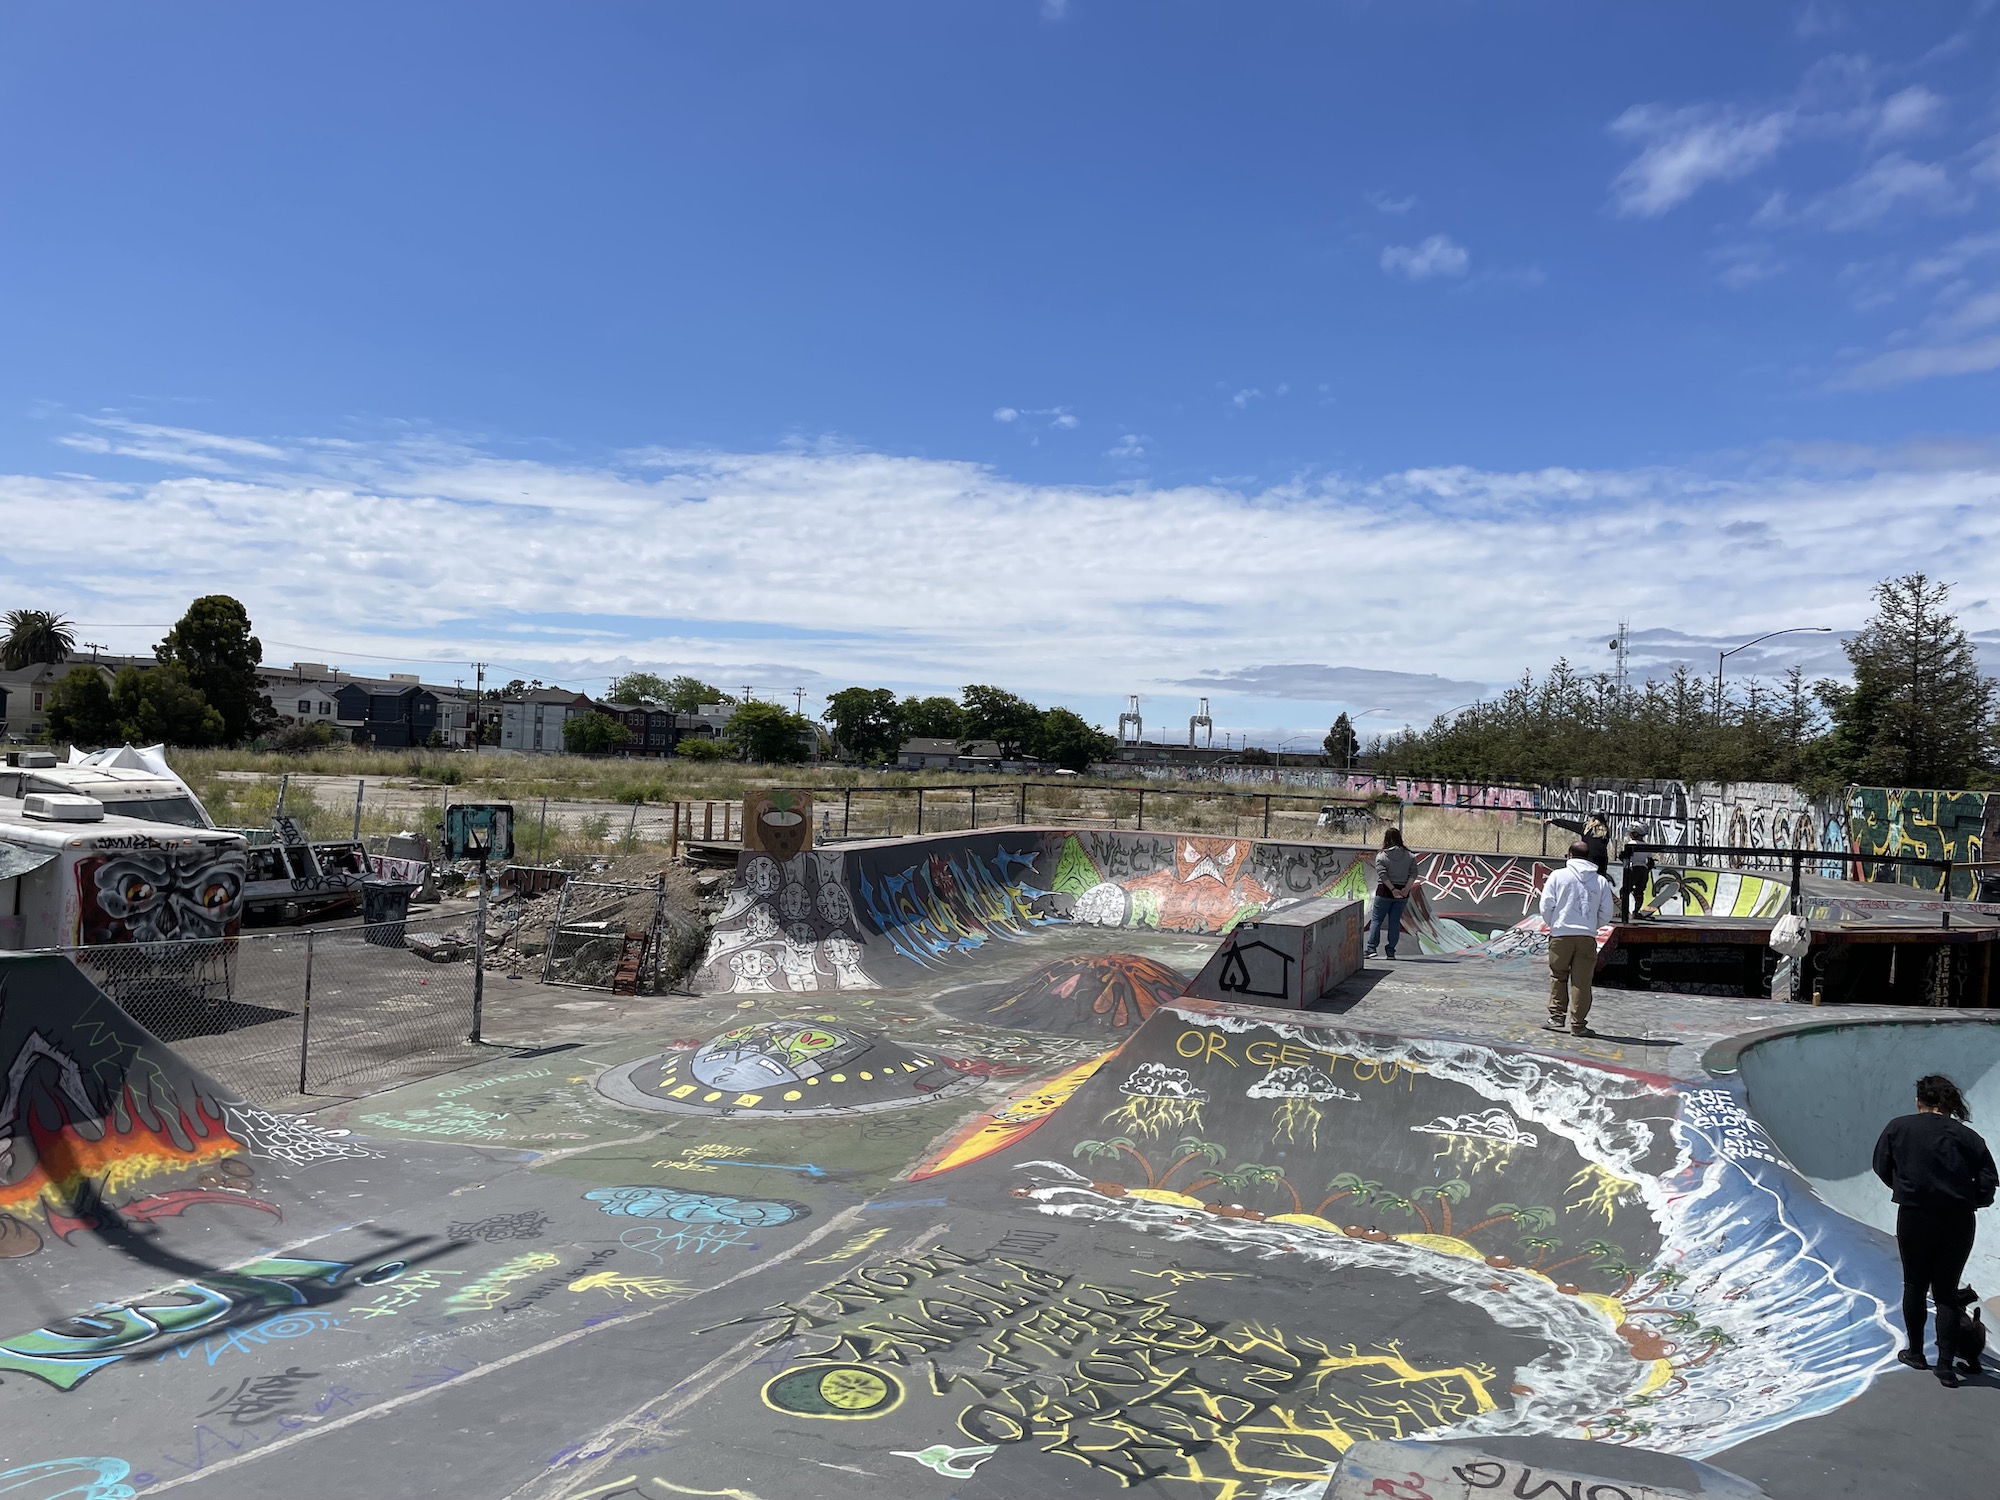 Lower Bobs Skatepark: Oakland's Underground Gem